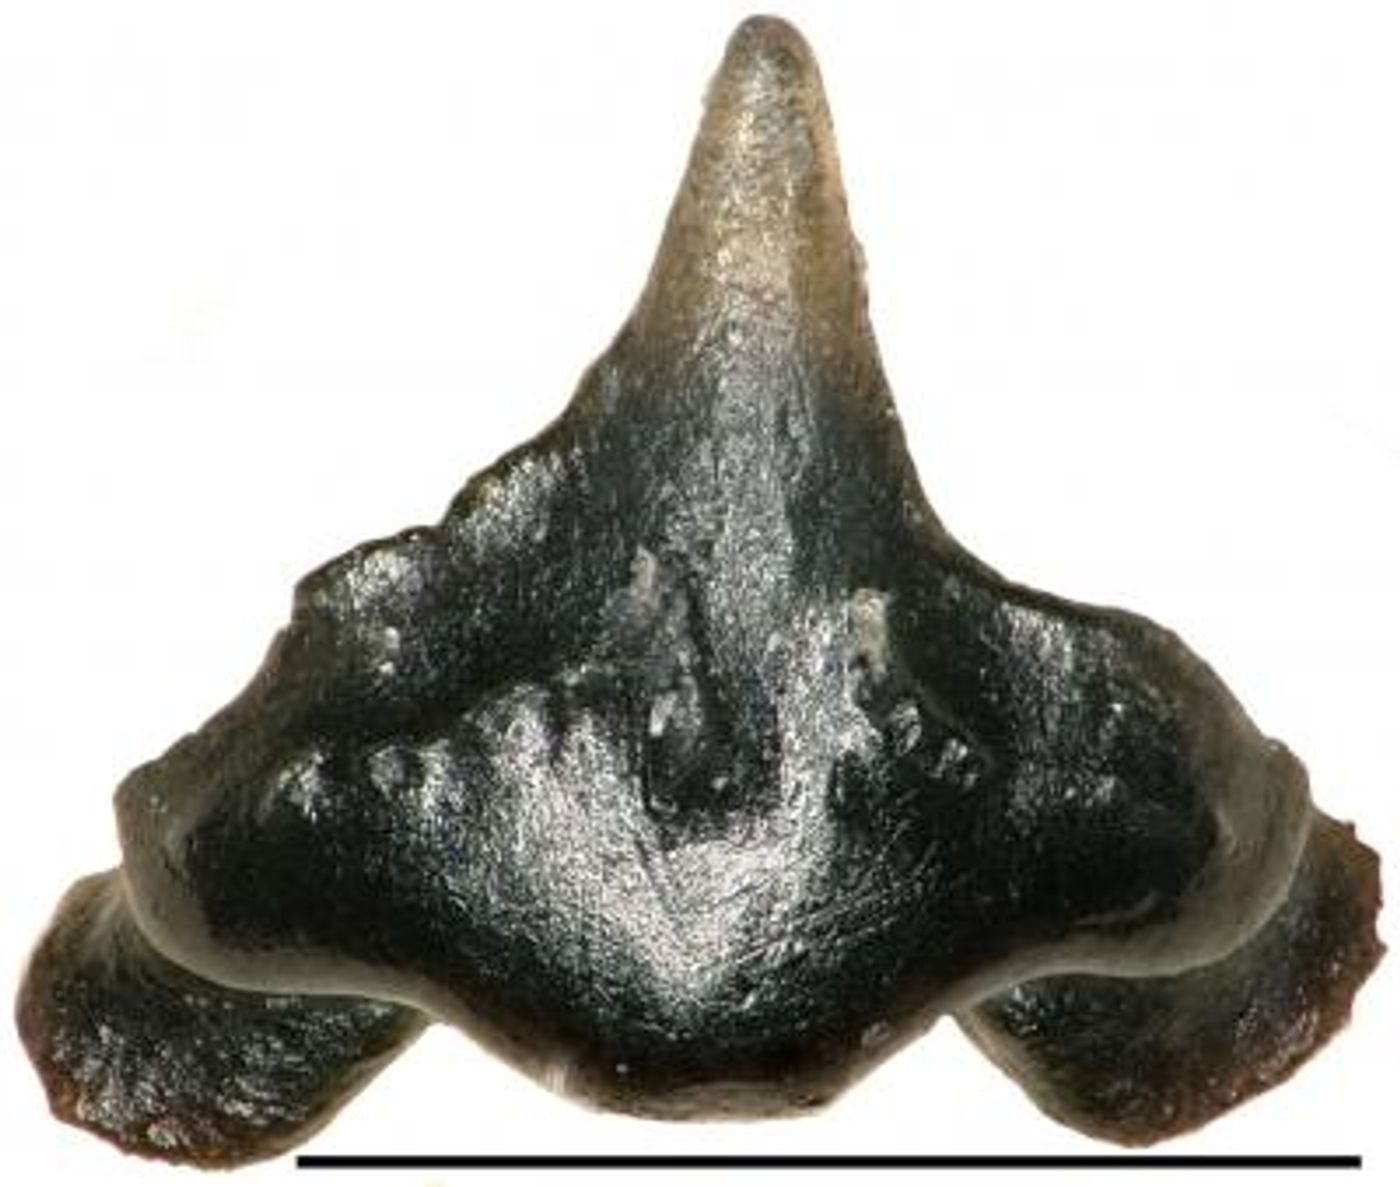 One of the teeth of Galagadon.